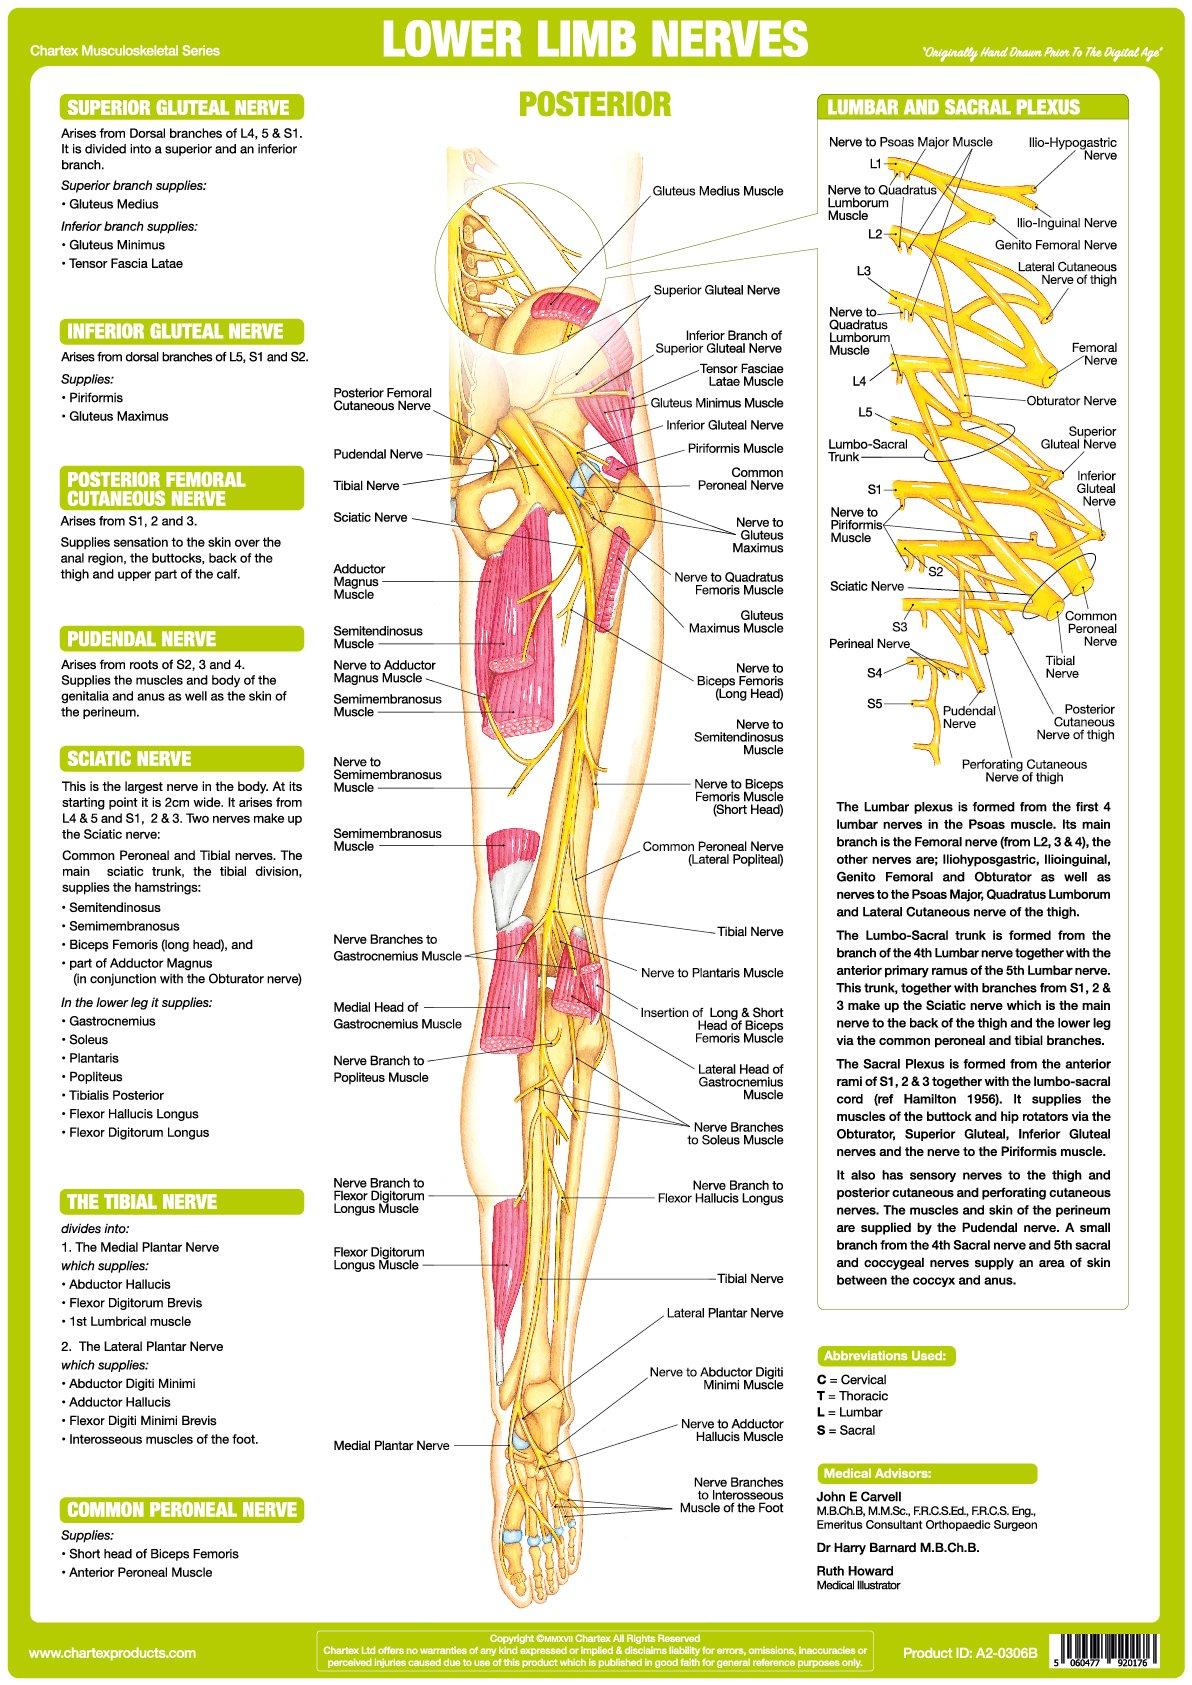 Nerve Anatomy Chart - Lower Limb Posterior